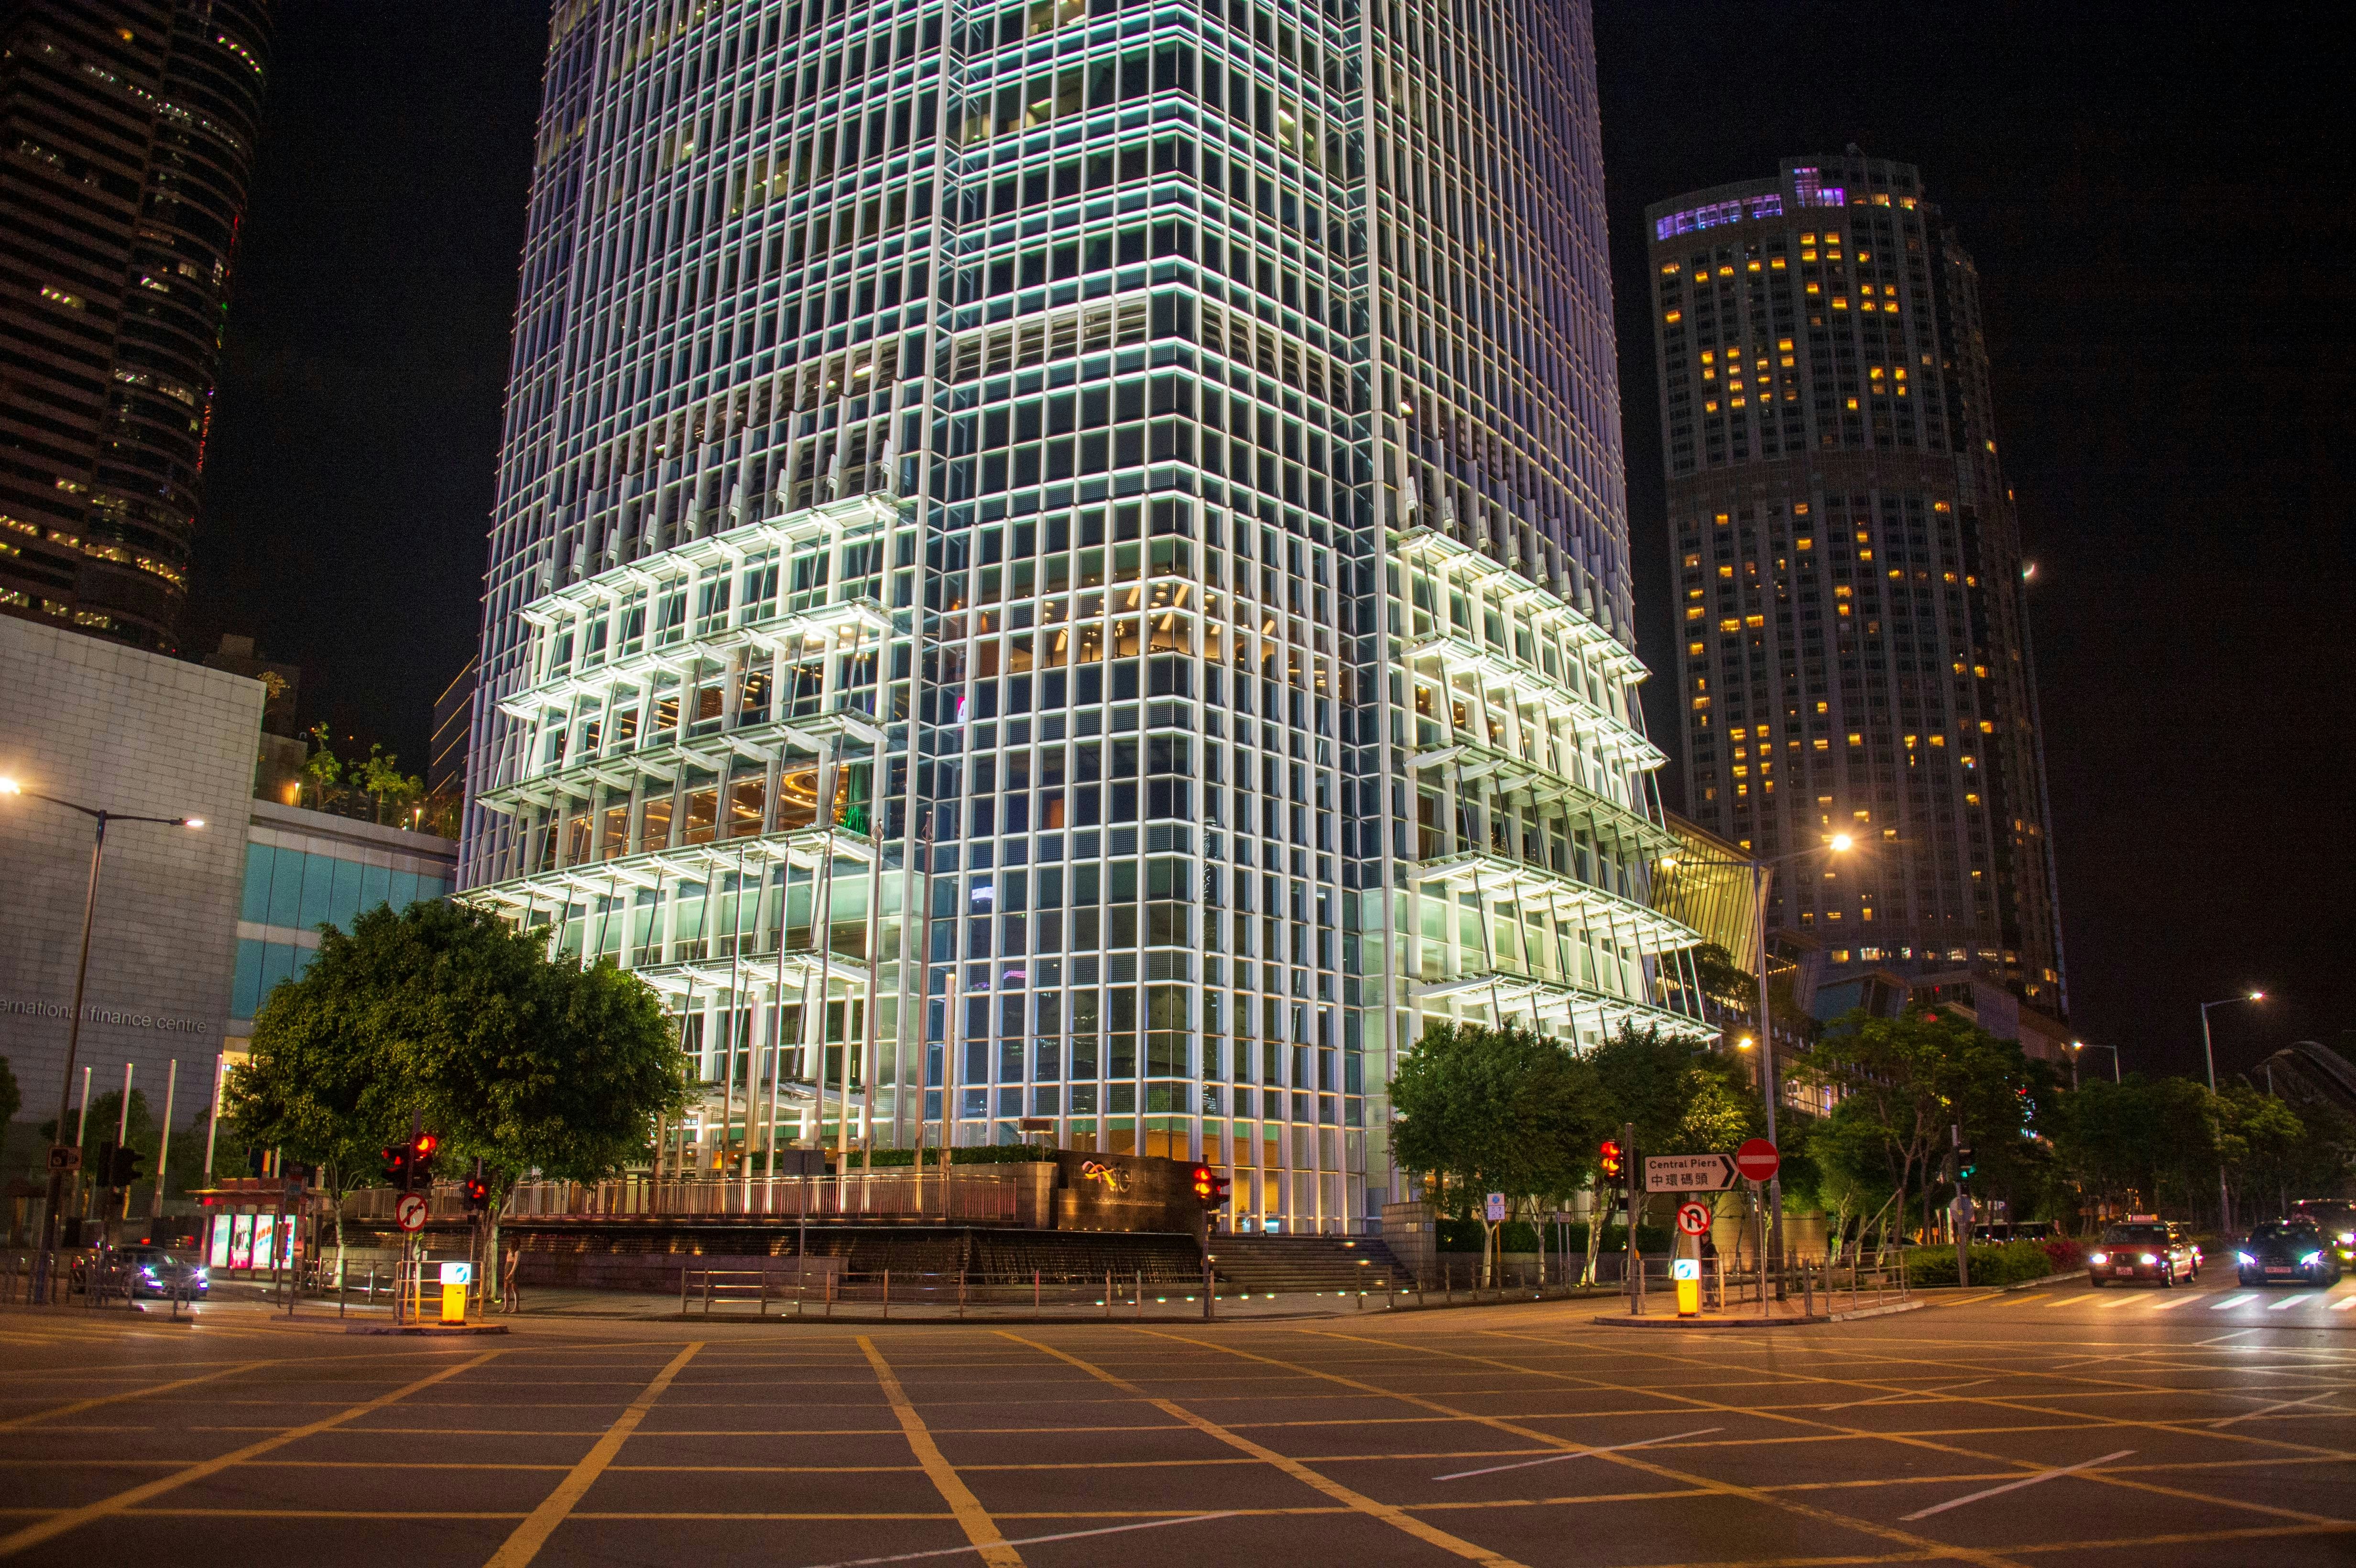 The glass facade of IFC in Hong Kong